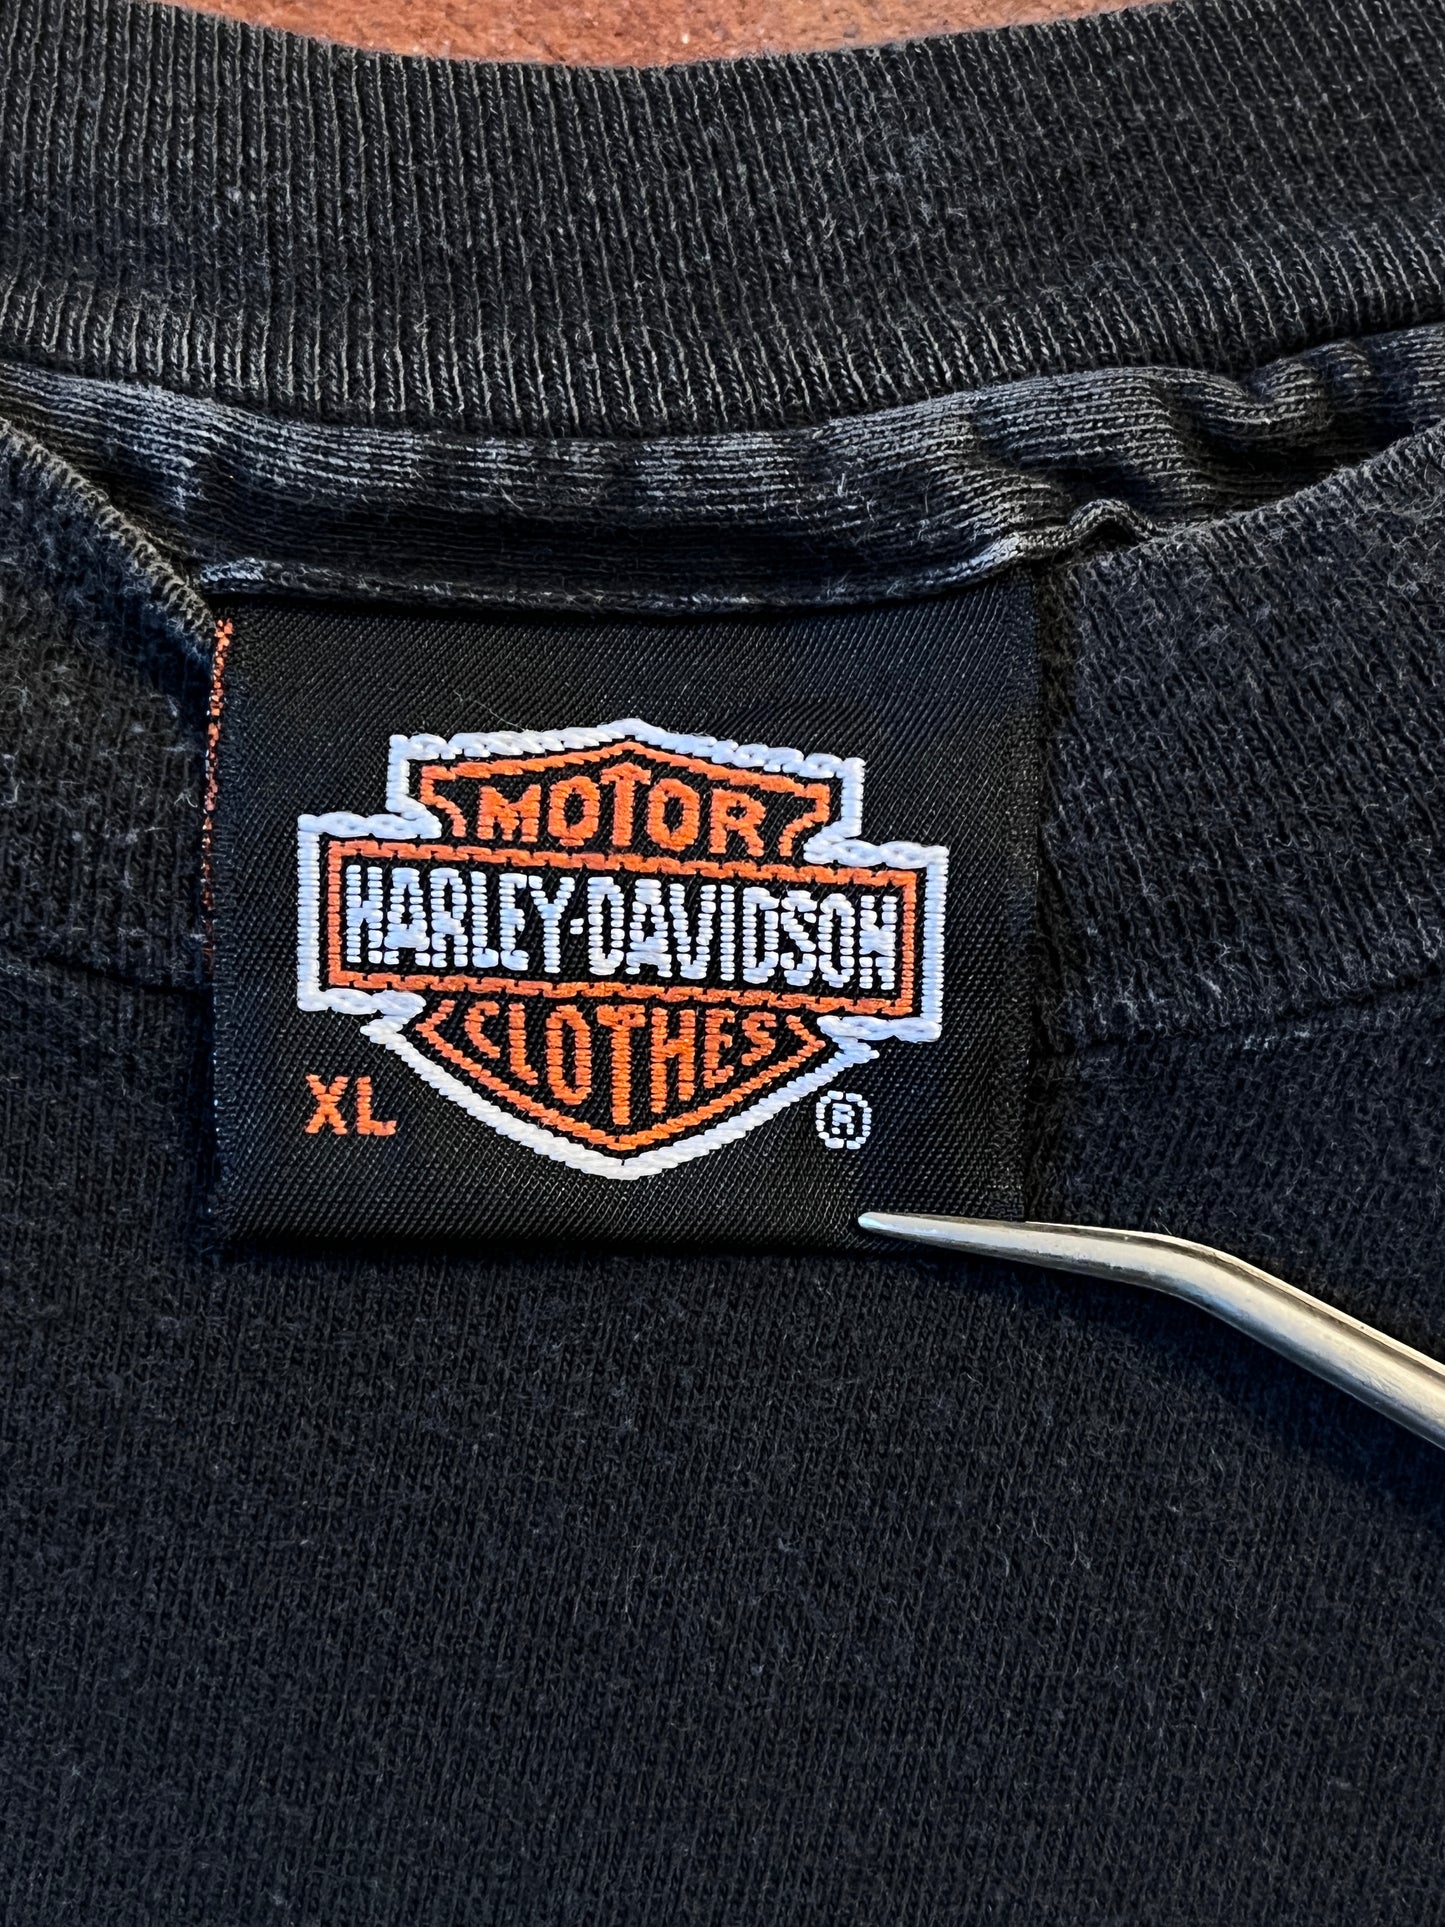 Harley Davidson Freedom Novelties '91